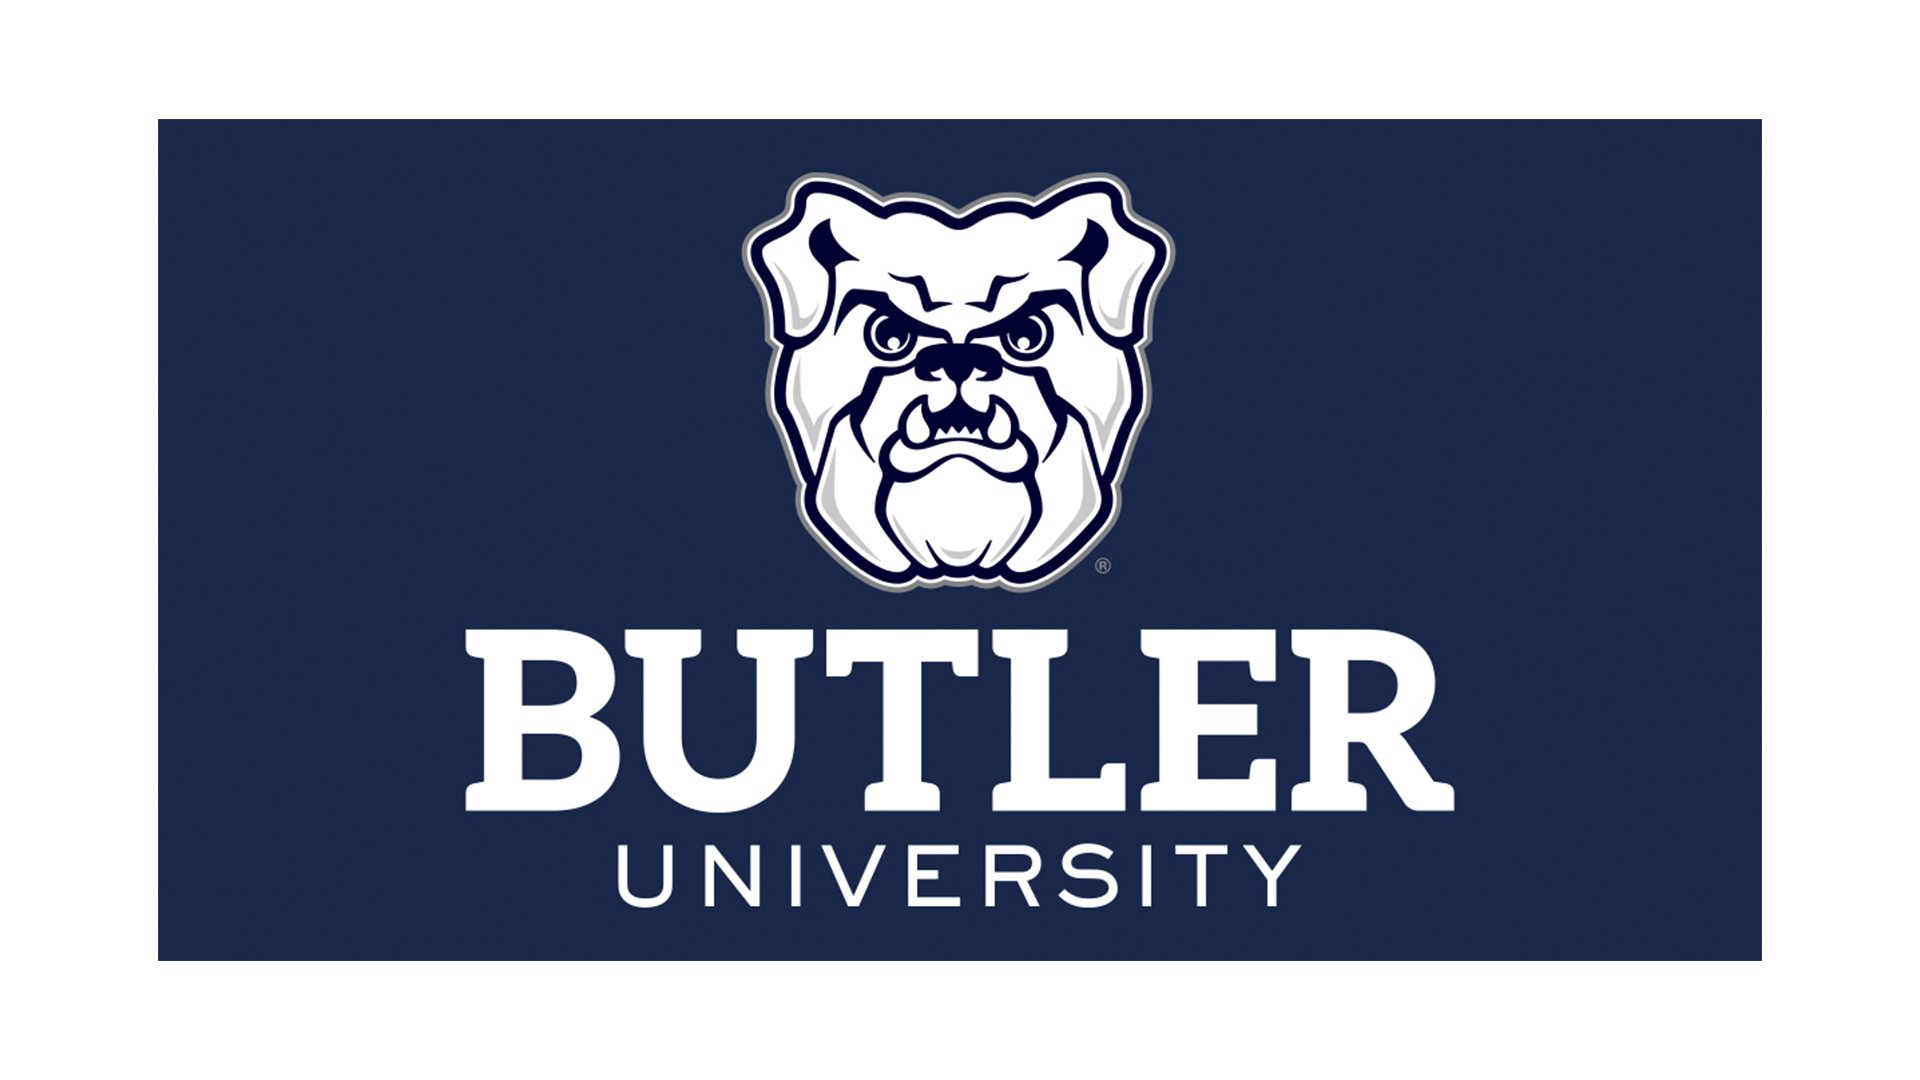 CEOi_0012_Butler University.jpg